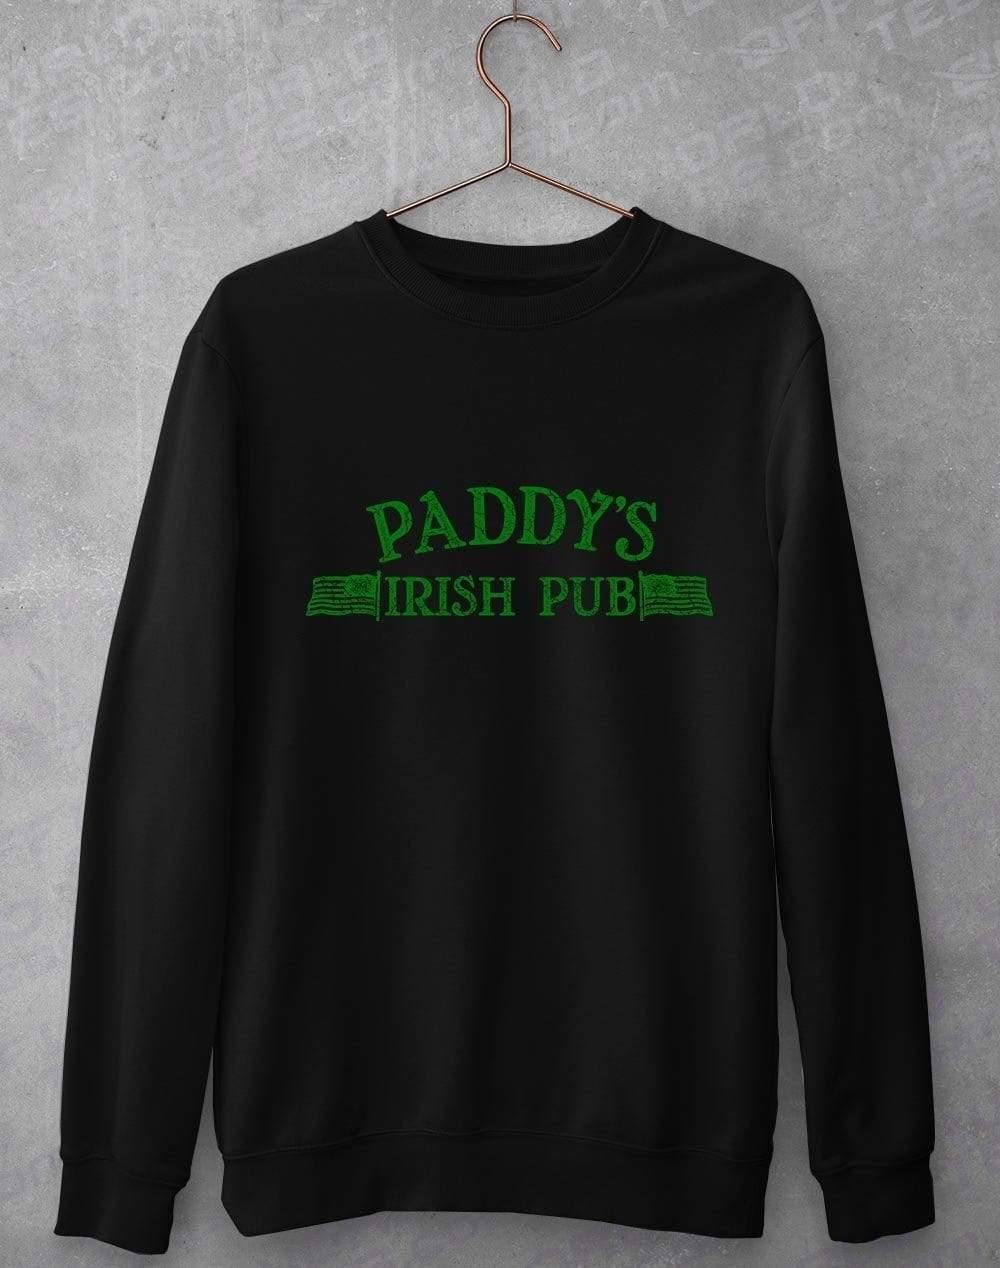 Paddys Irish Pub Sweatshirt S / Black  - Off World Tees